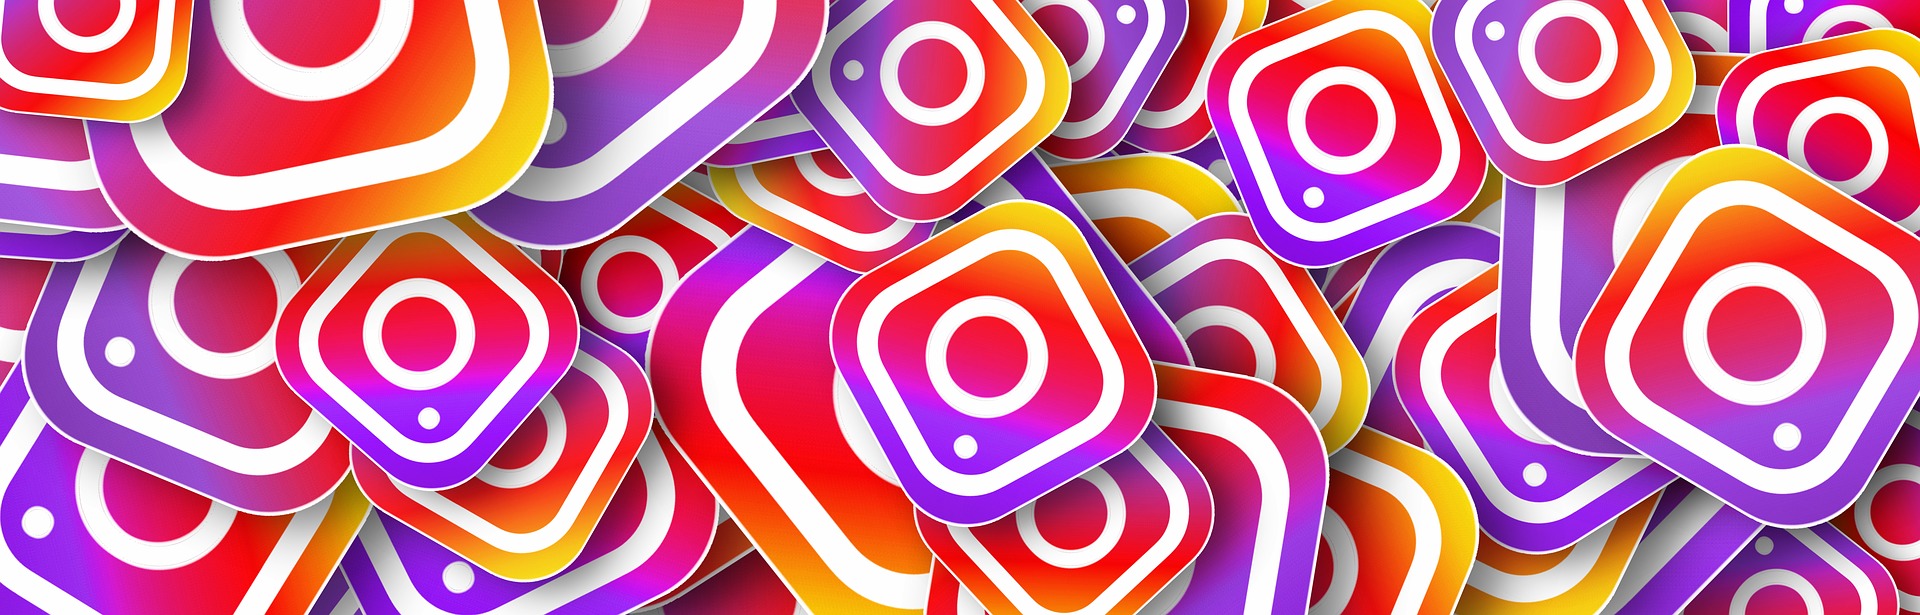 Swipe-up Instagram come ottenerlo